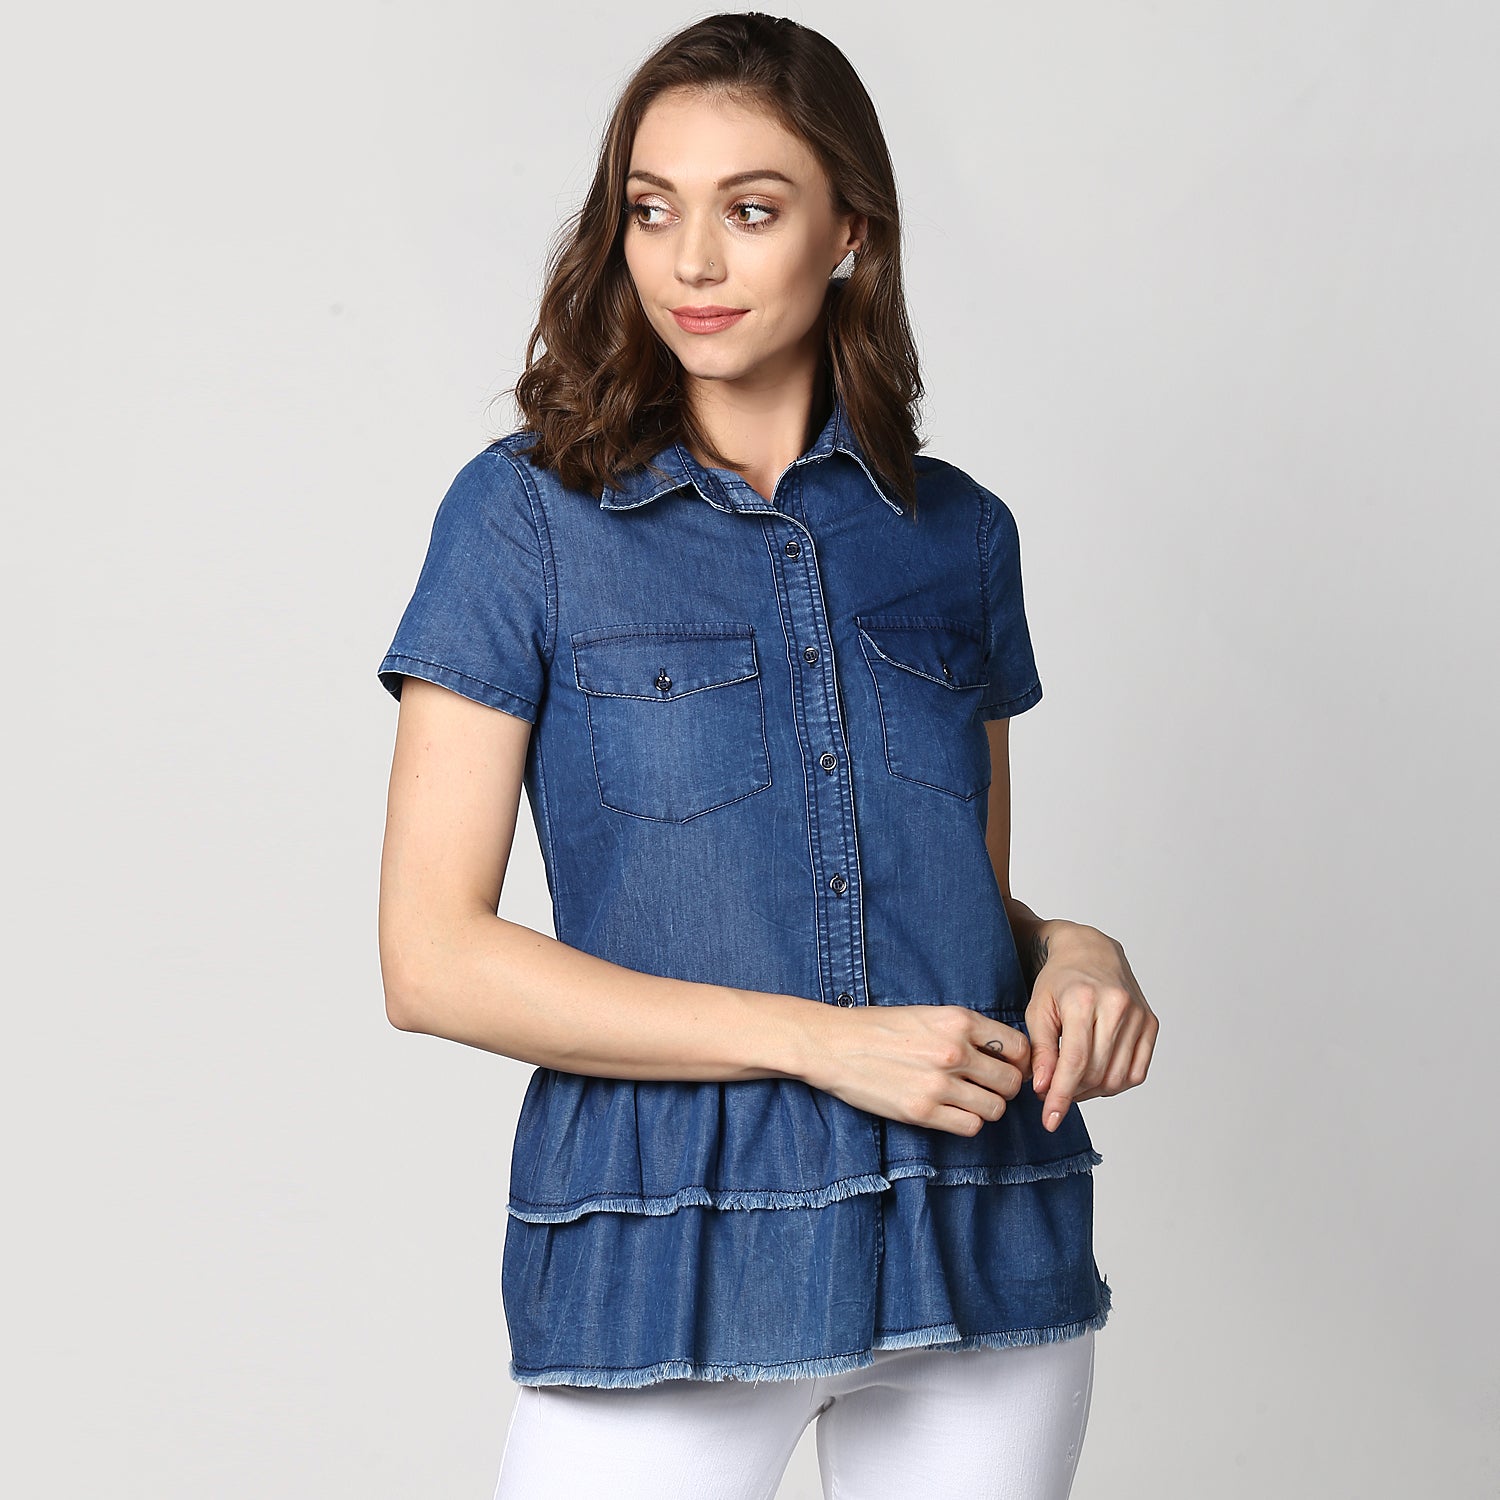 Women's Navy Blue Denim Peplum Top cum Shirt - StyleStone